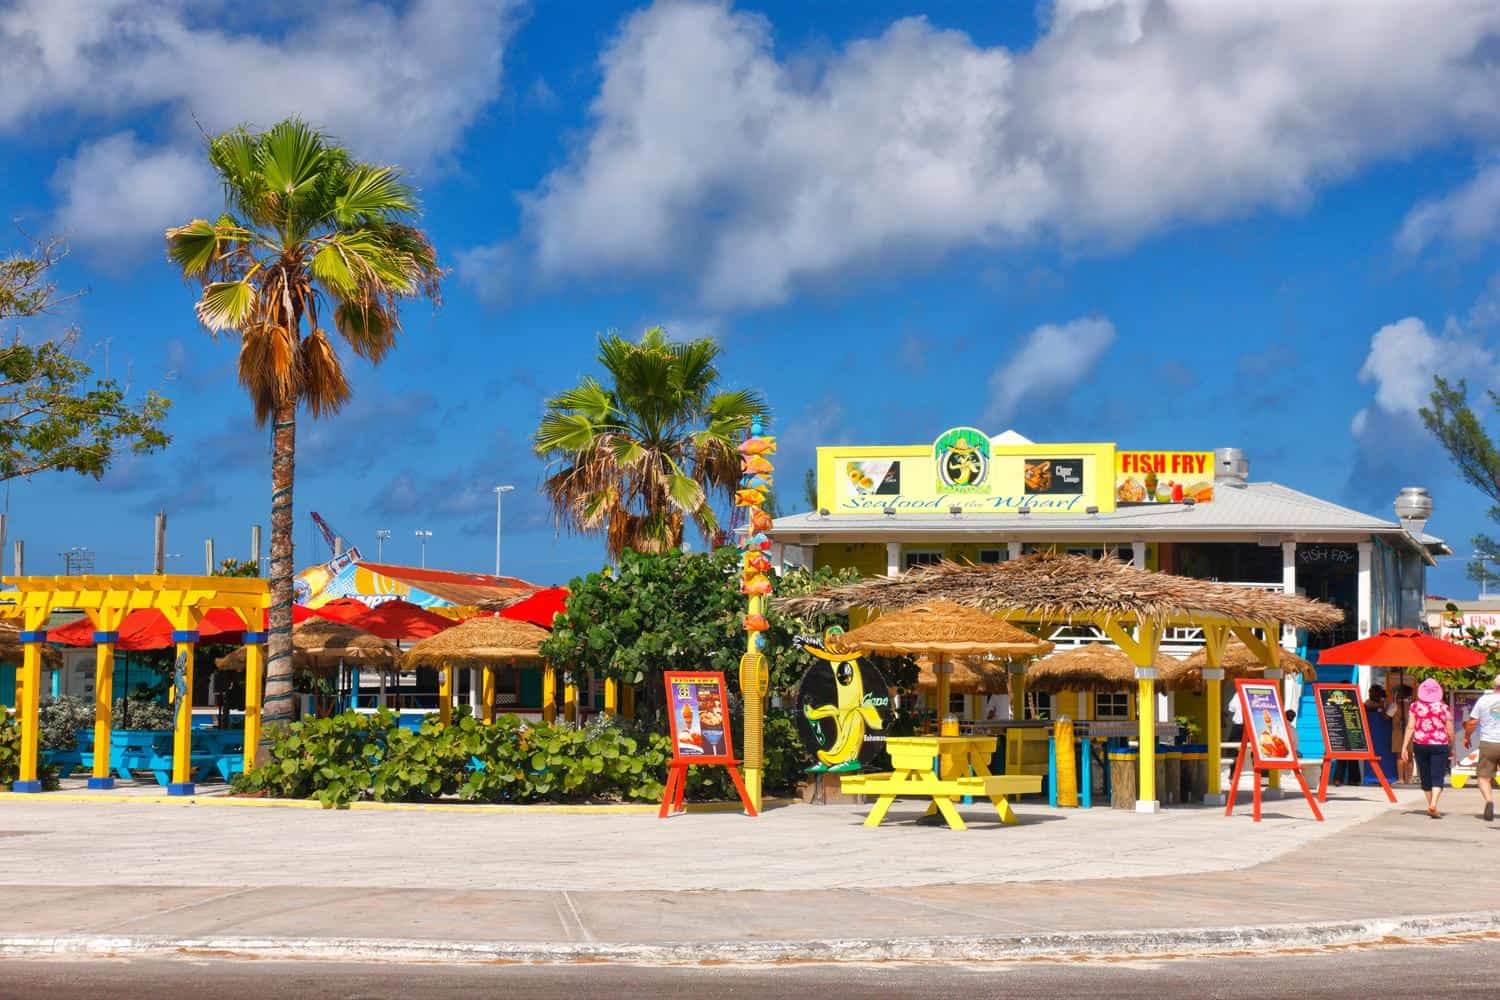 Nassau bahamas singles resorts